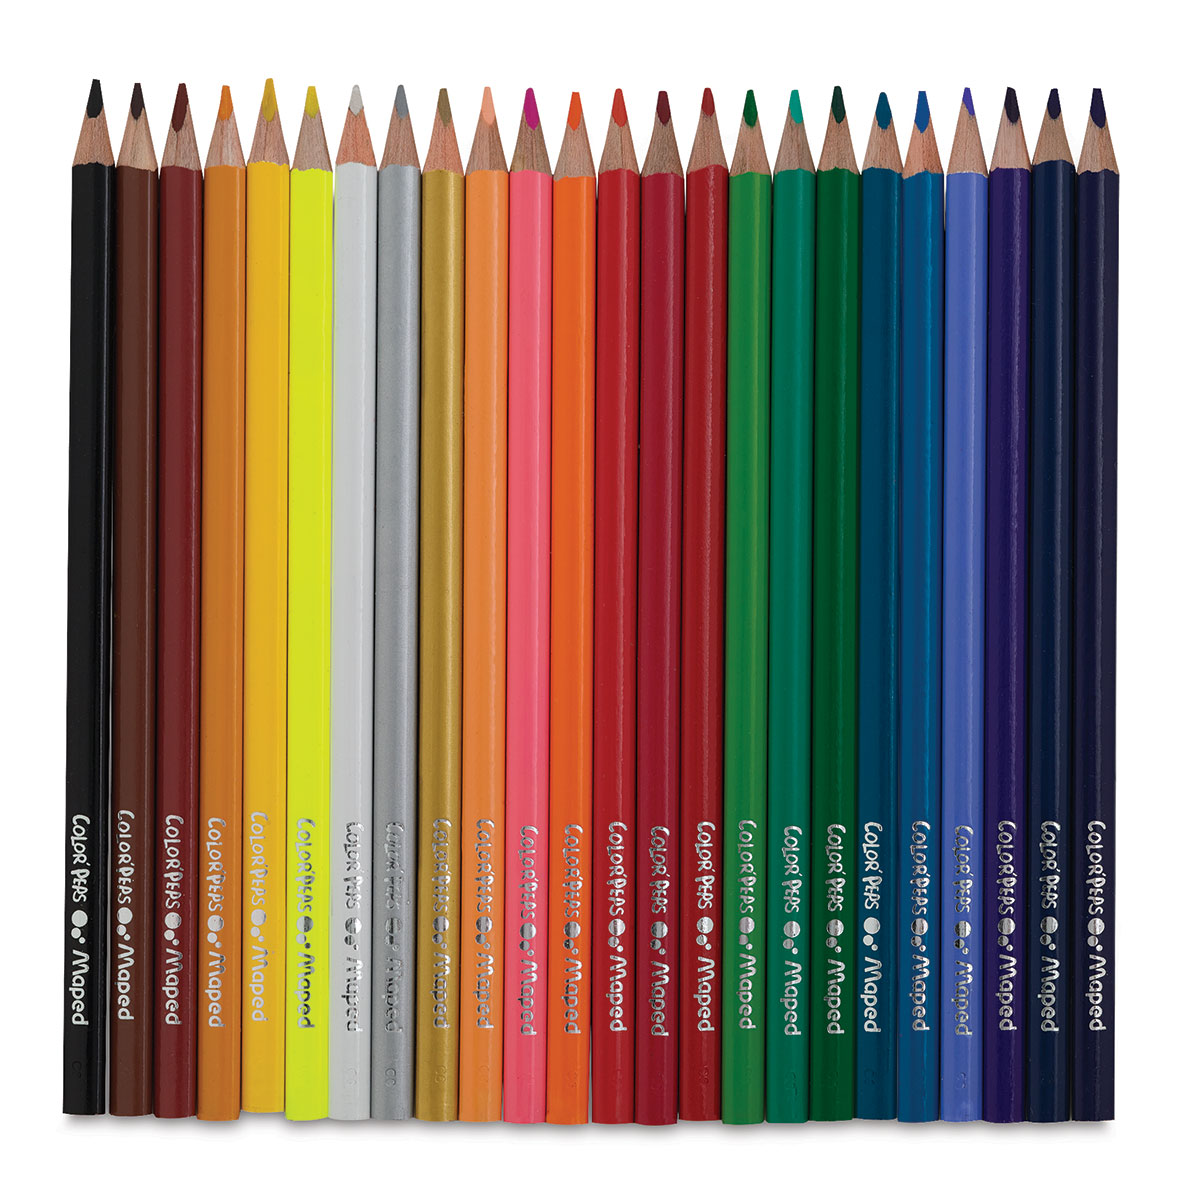 Maped Pencil Eraser  BLICK Art Materials